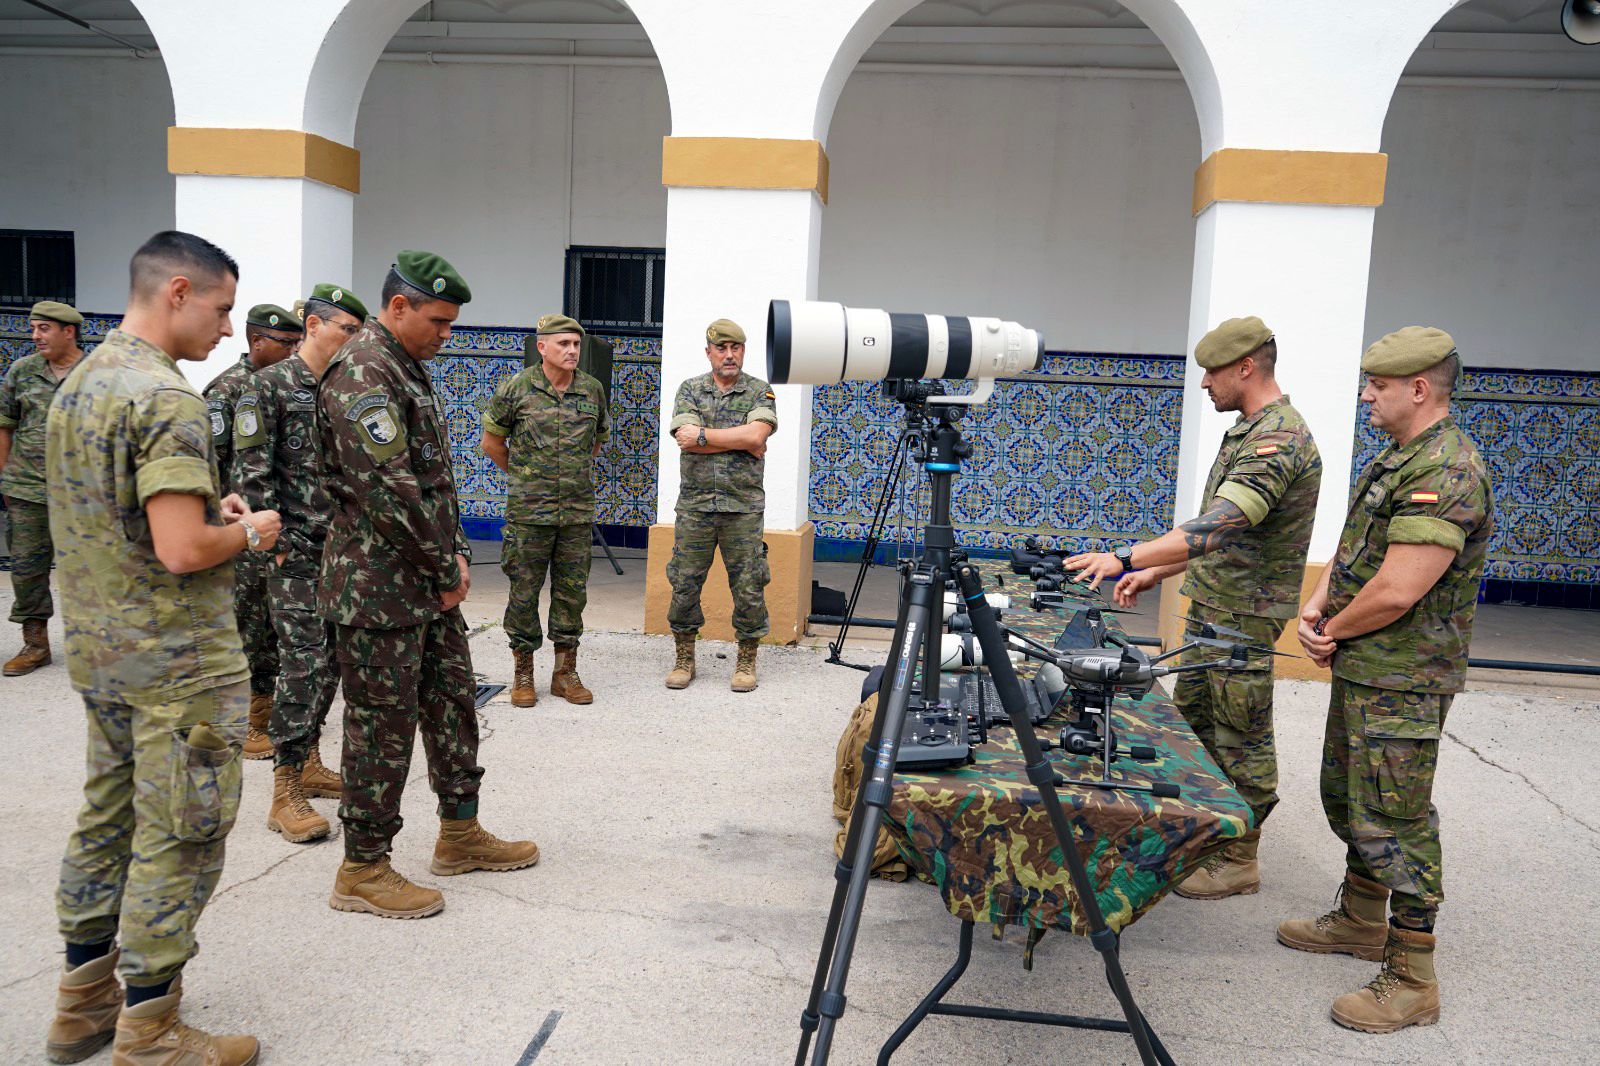 Una delegación del Centro de Comunicación Social del Estado Maior do Exército Brasileño ha realizado una visita oficial a España